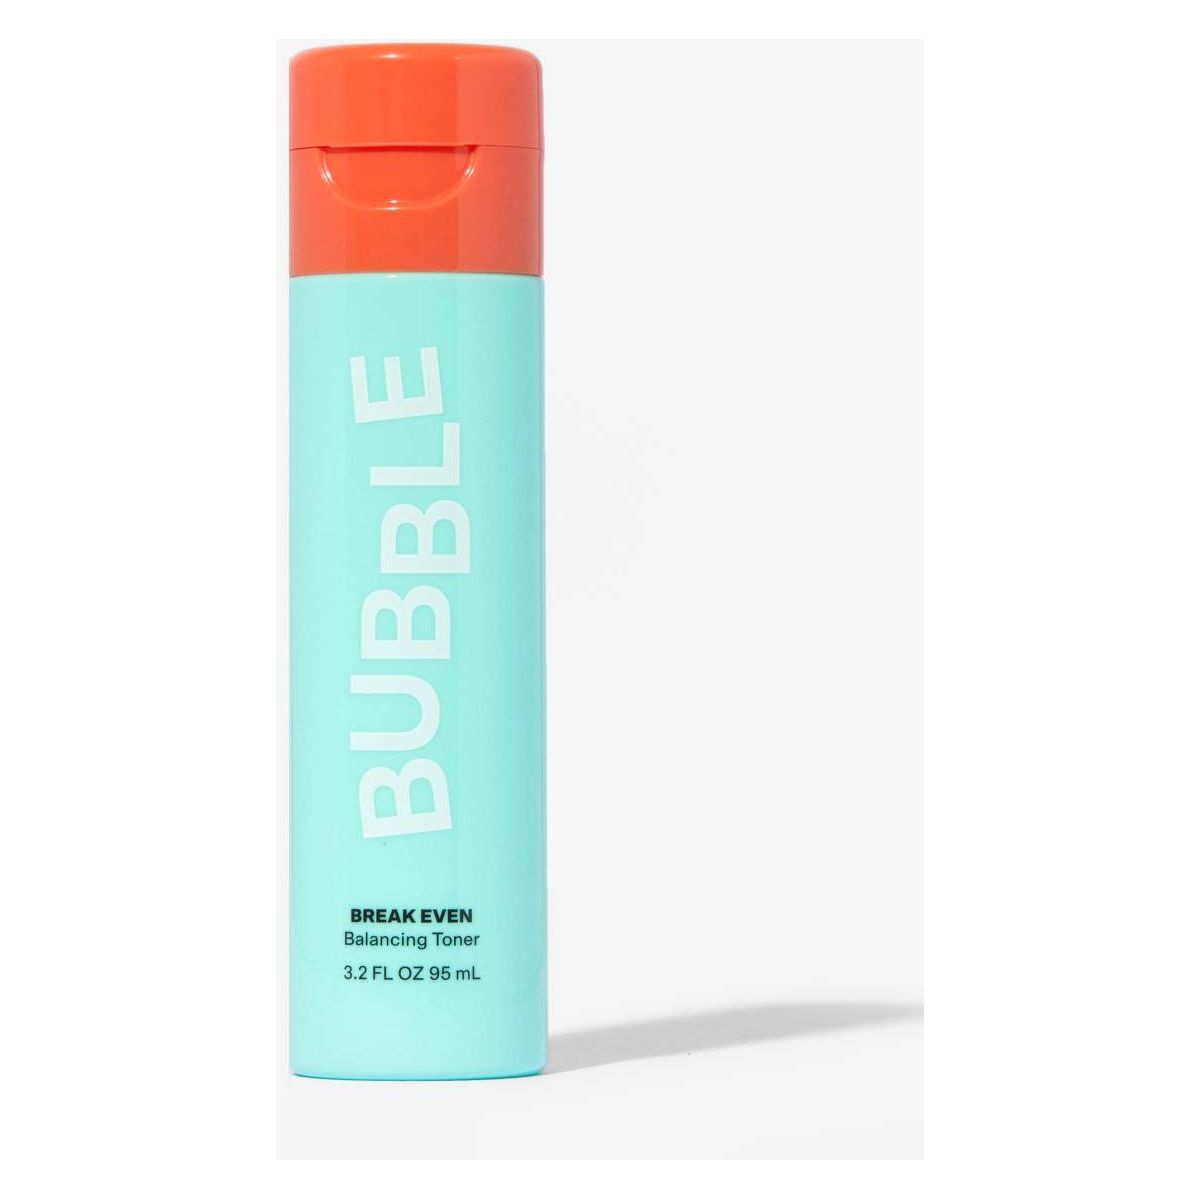 Bubble Break Even Ph Balancing Toner for Oily Skin - 95ml - DG International Ventures Limited